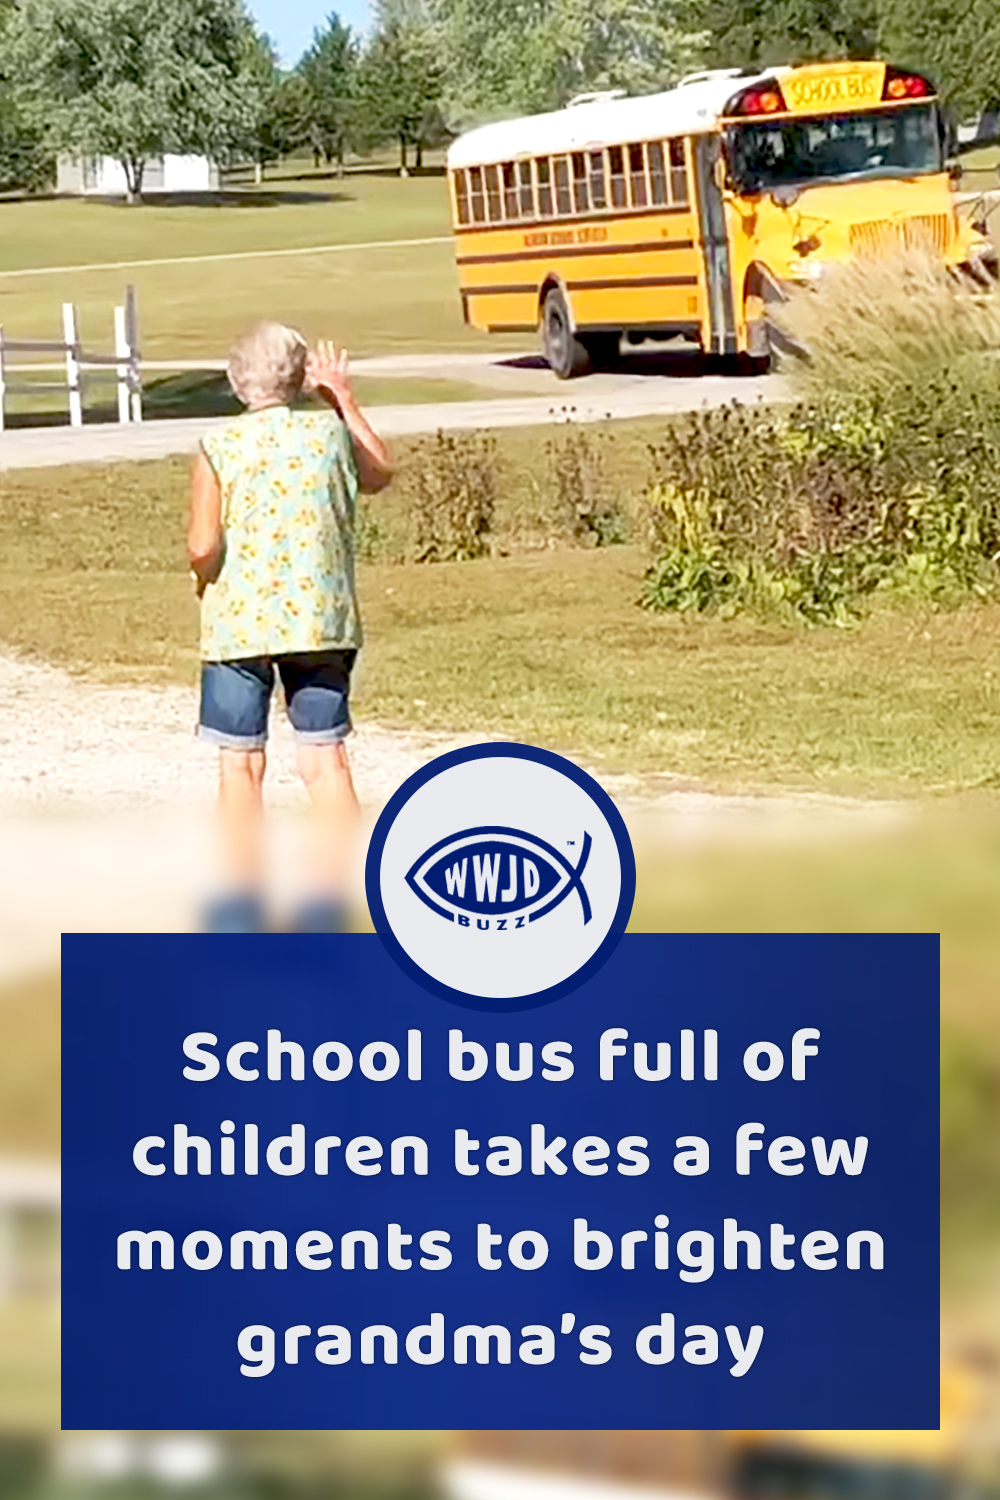 School bus full of children takes a few moments to brighten grandma’s day